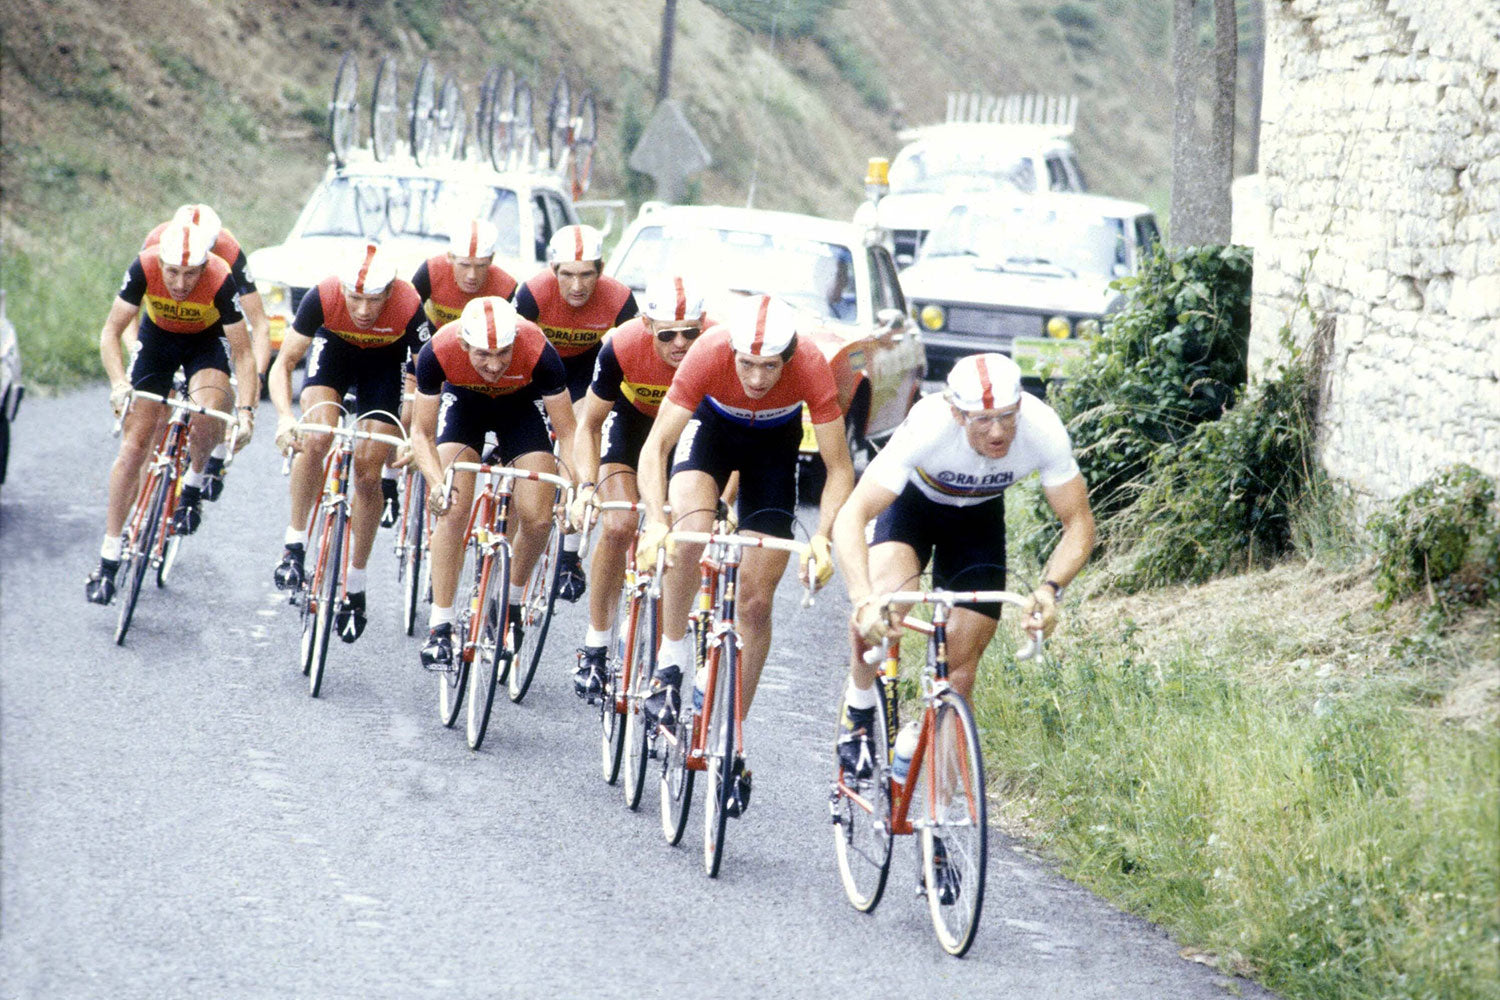 <p>The Raleigh-TI team riding their speciality team time trial at the 1980 Tour de France. The riders are Jan Raas, Johan Van de Velde, Gerrit Knetemann, Paul Wellens, Cees Priem, Bert Oosterbosch, Henk Lubberding and Joop Zoetemelk.